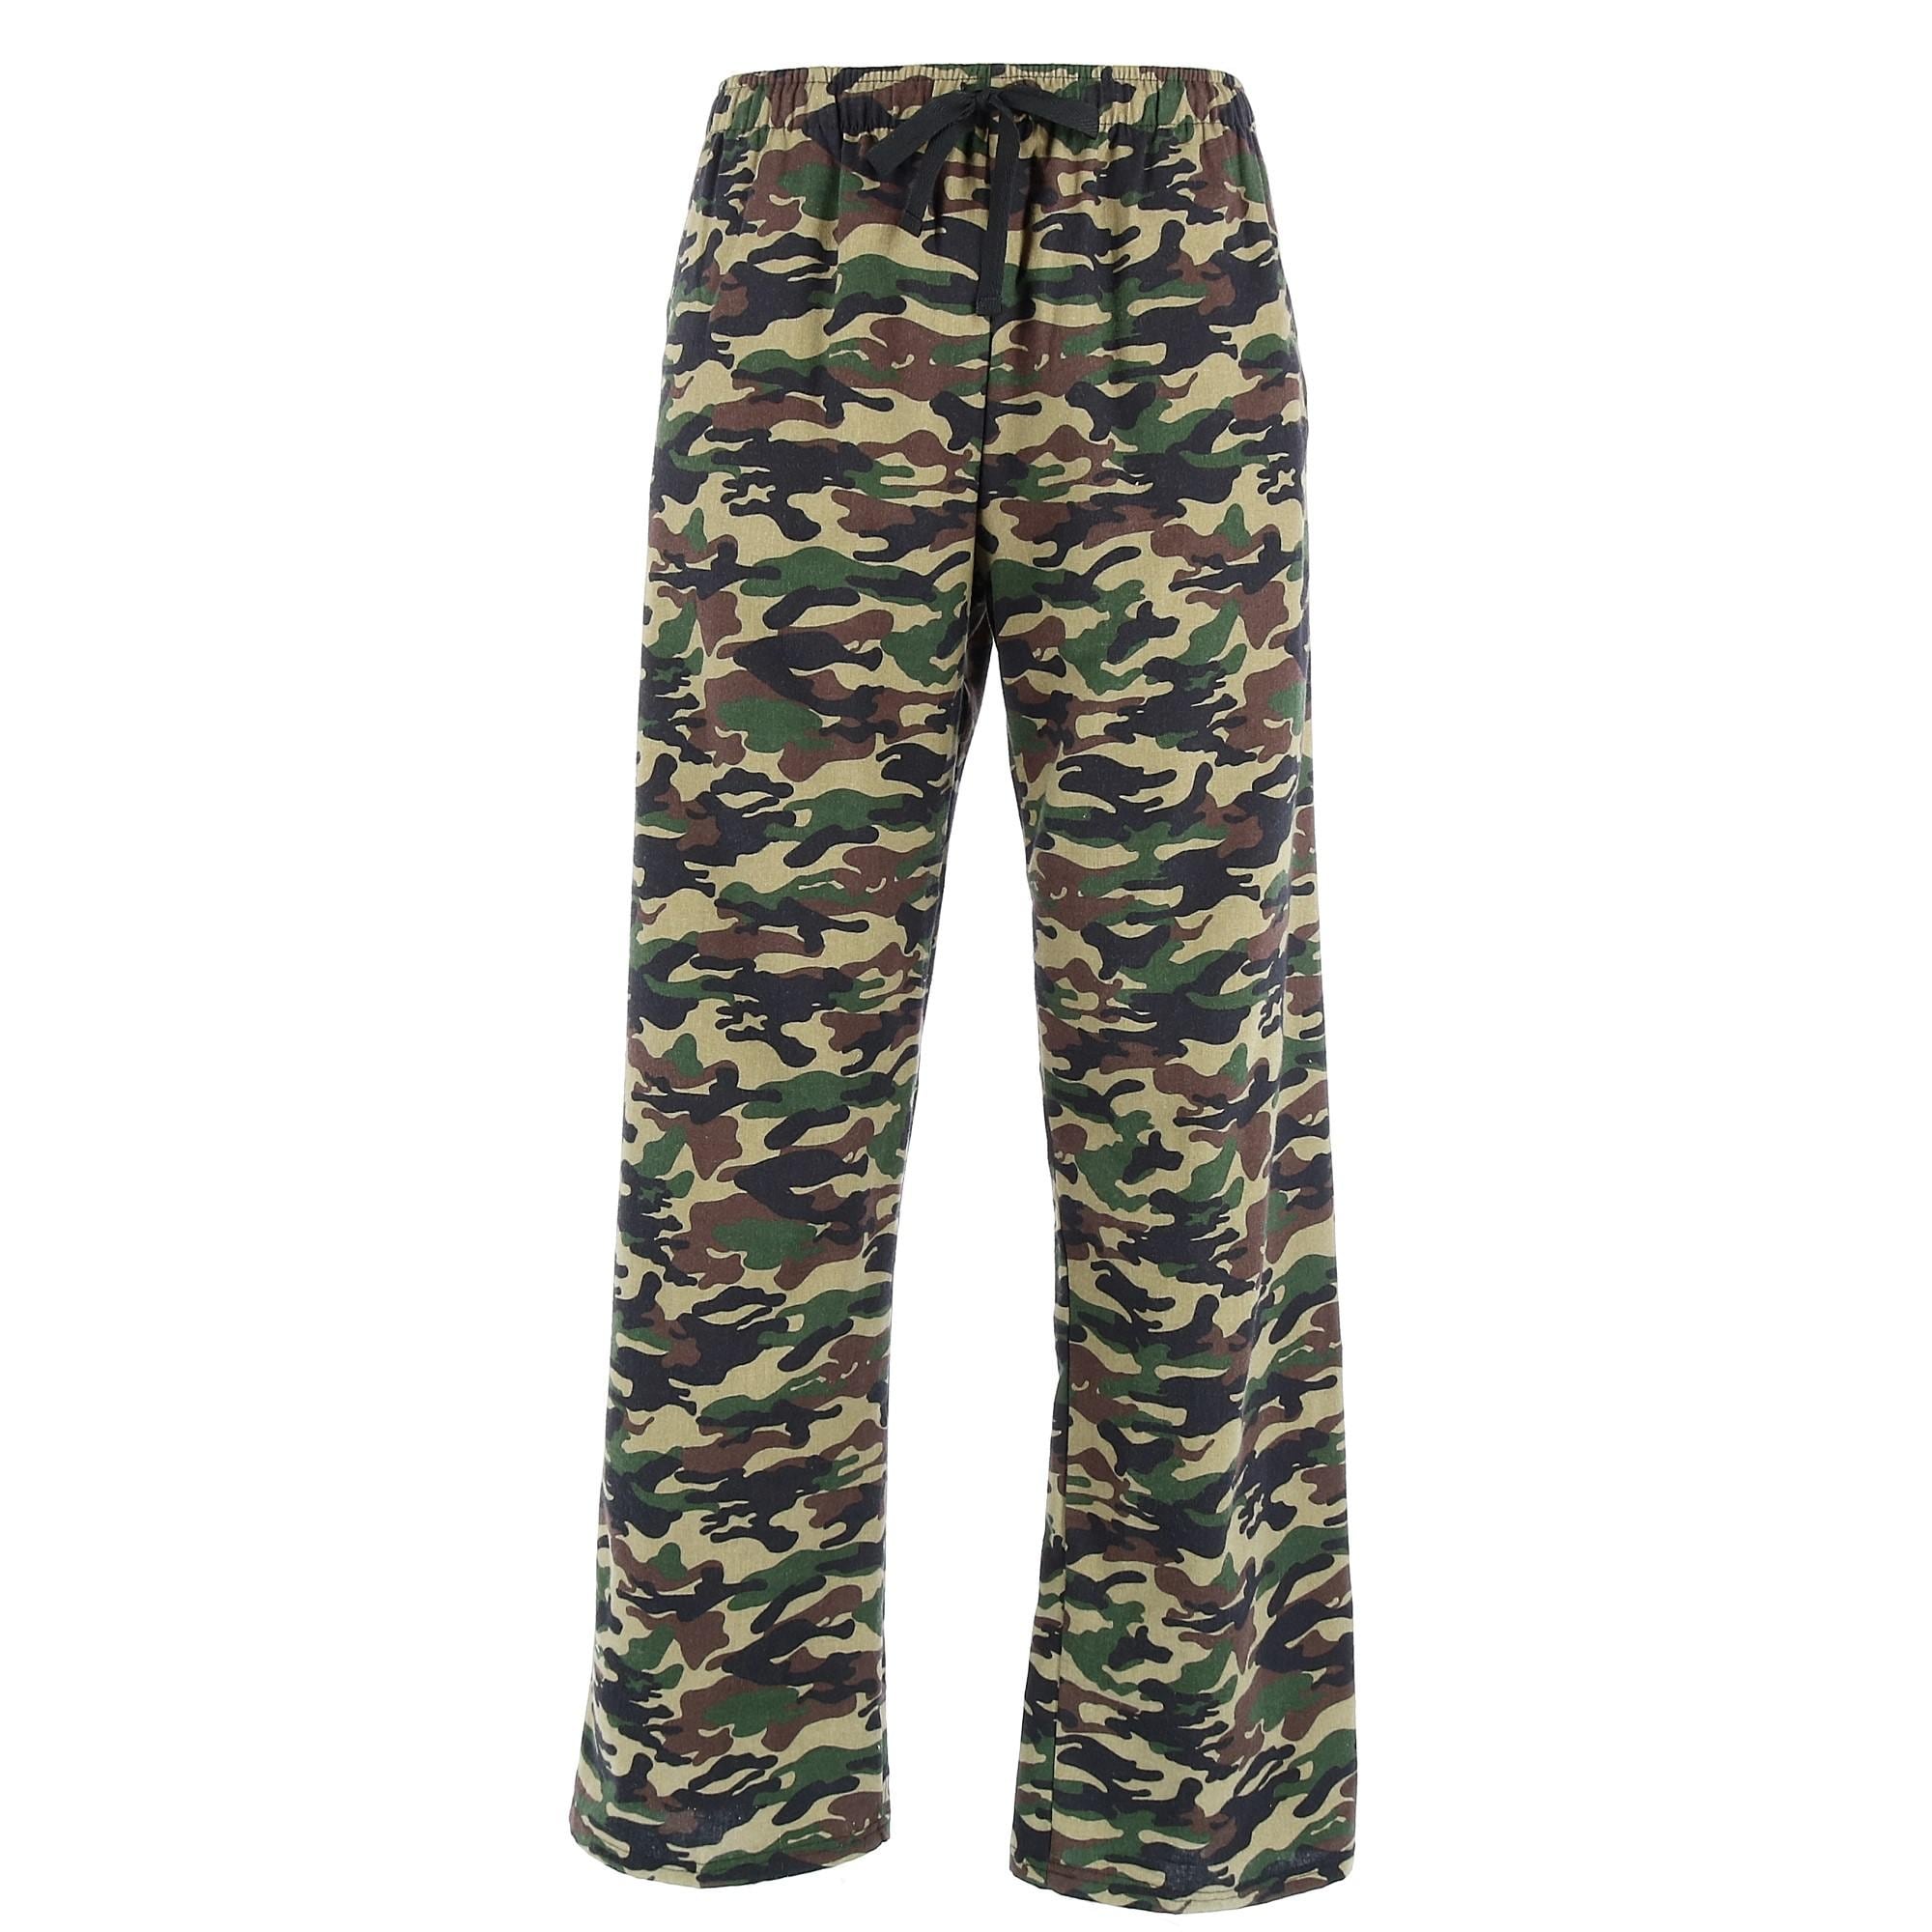 Boxercraft Men's Camouflage Print Flannel Pajama Pants